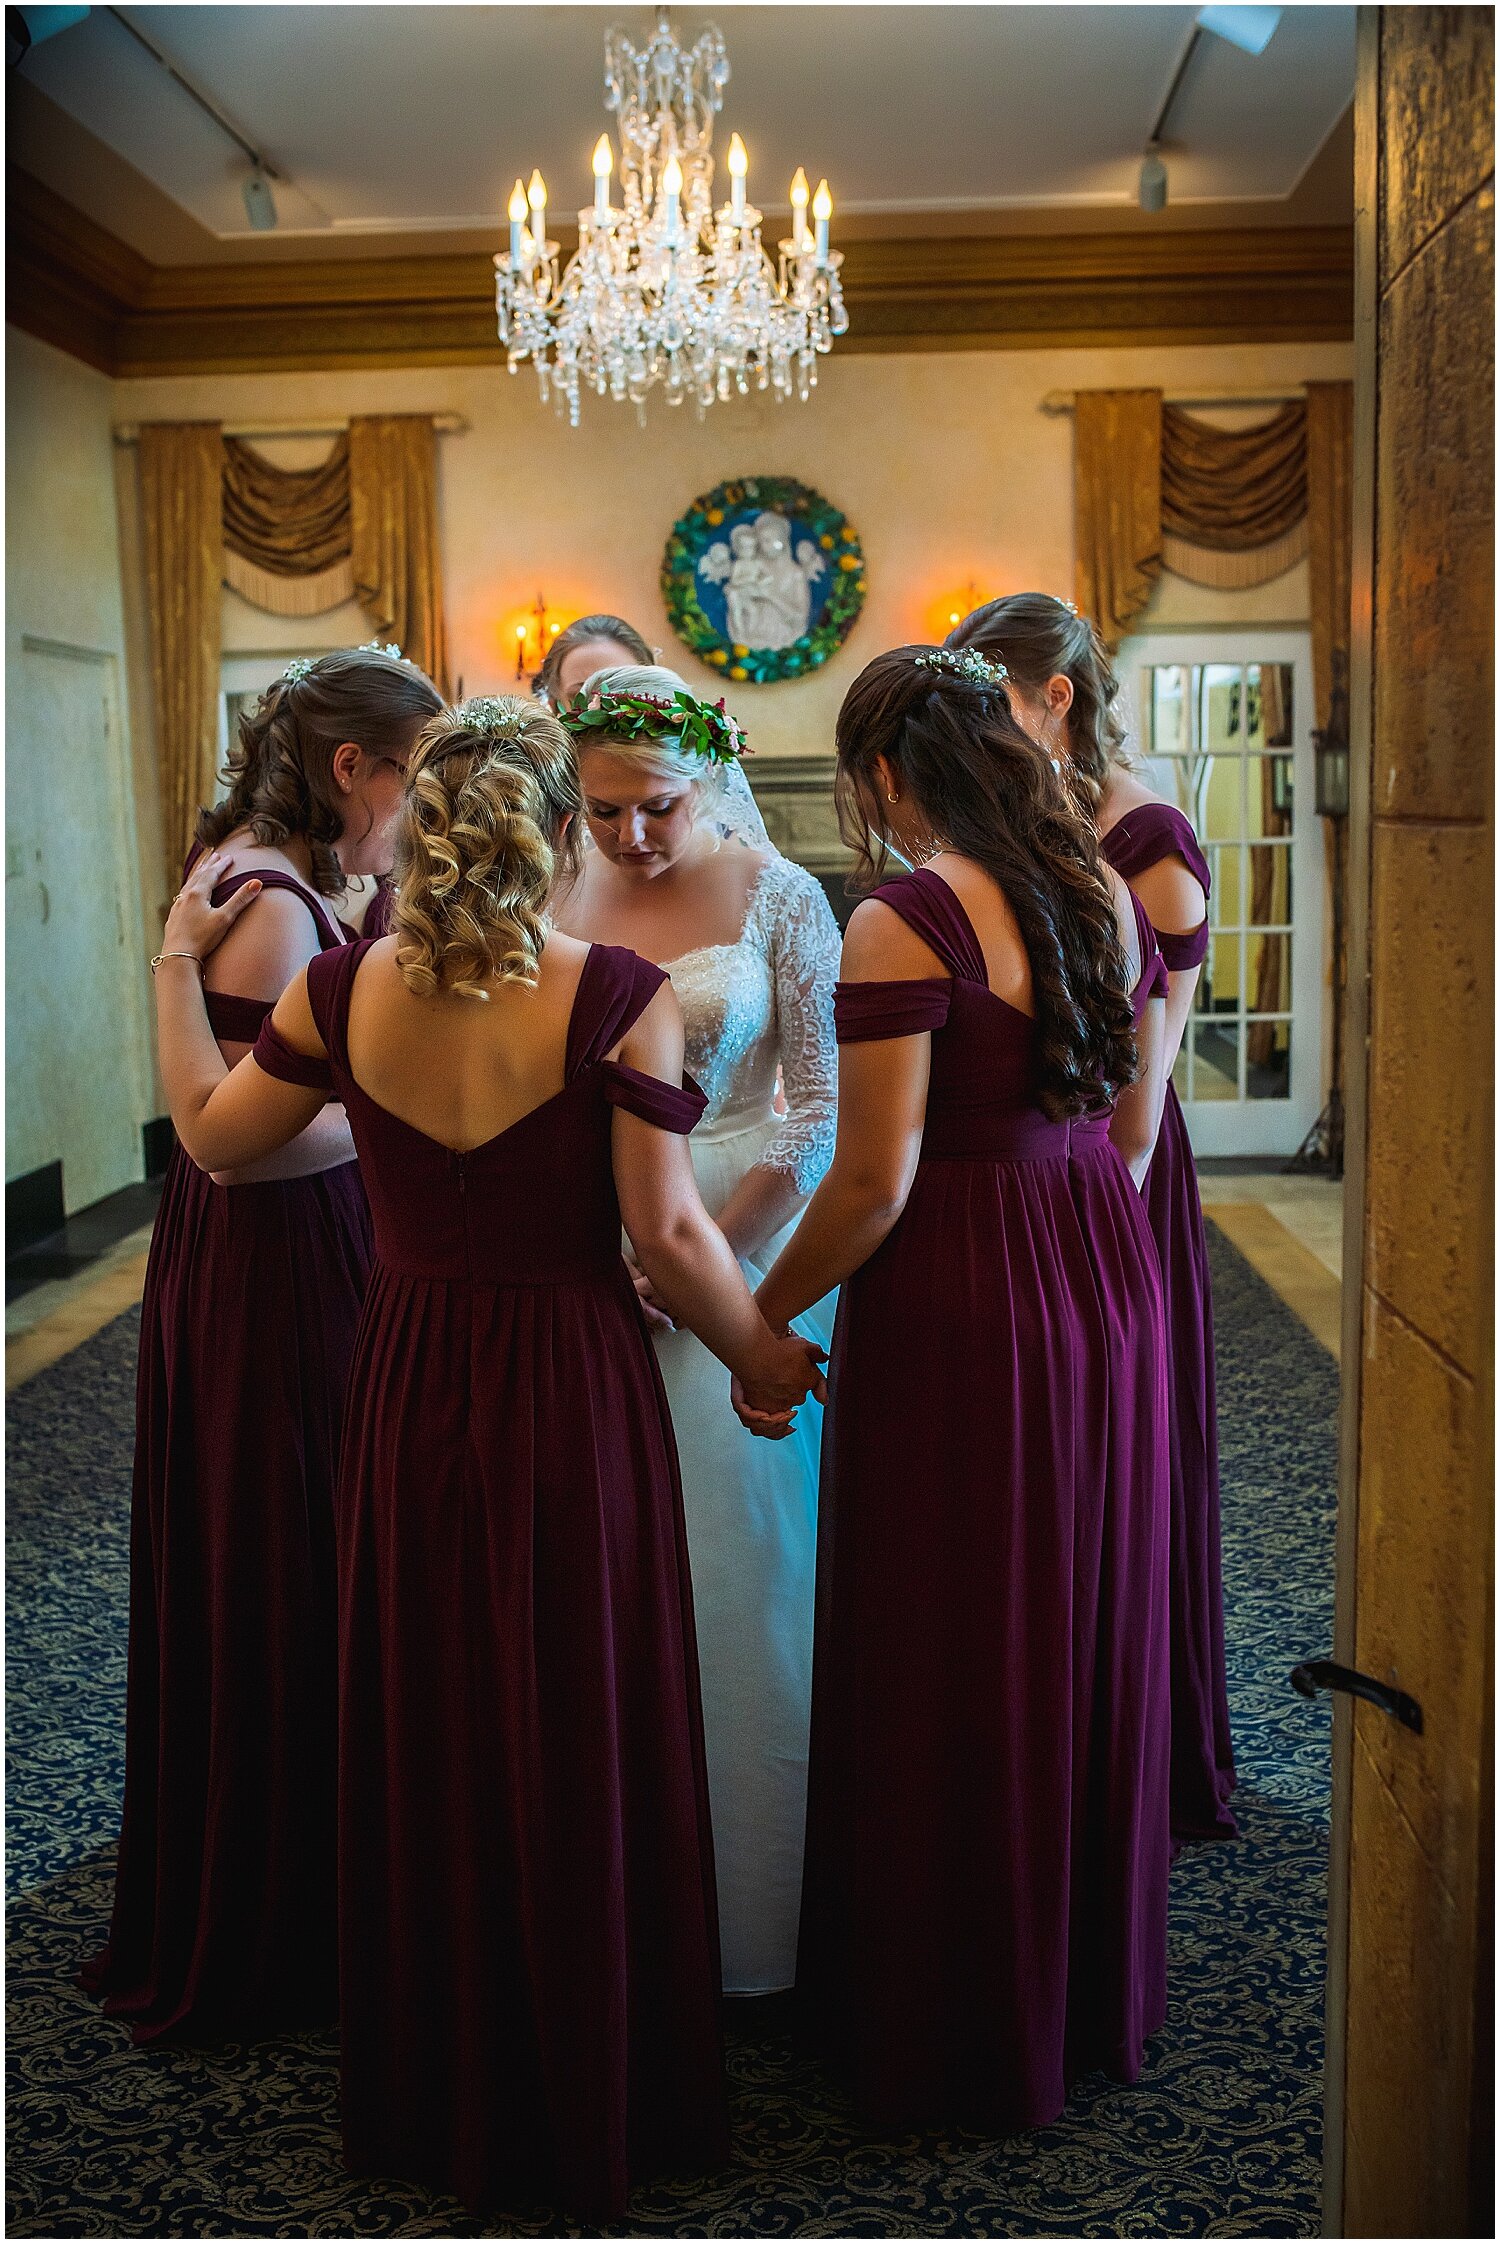  bride and bridesmaids praying before the wedding 